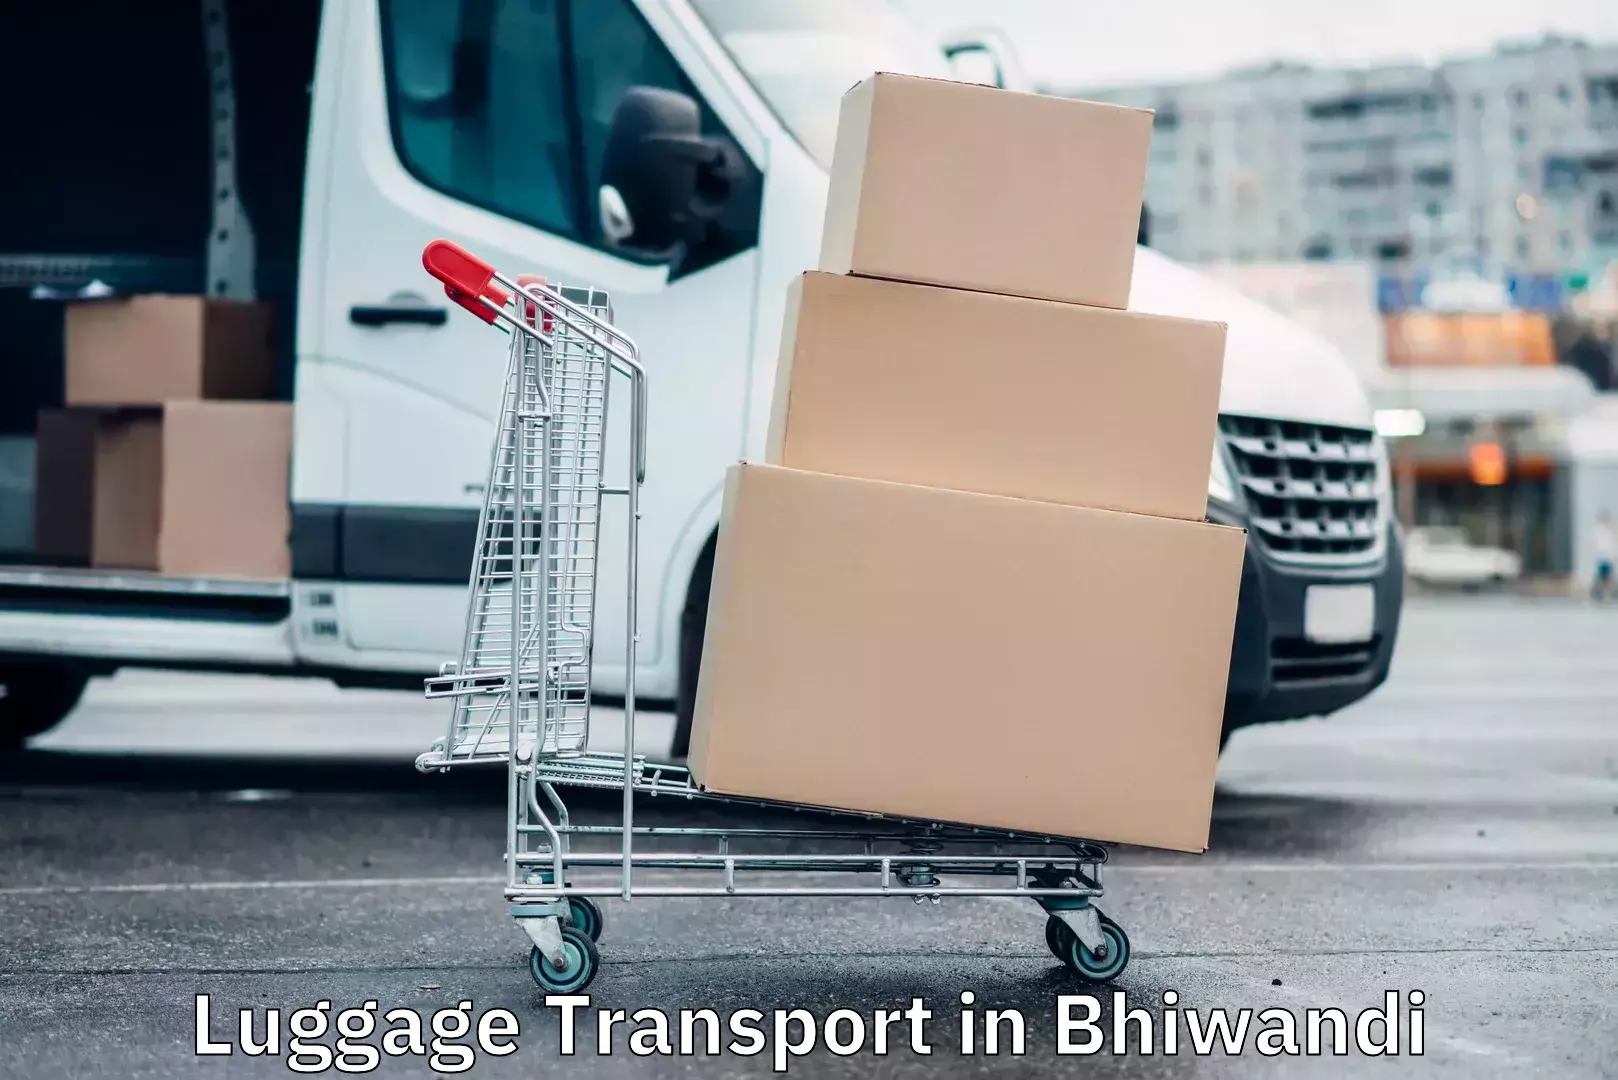 Luggage transport rates in Bhiwandi